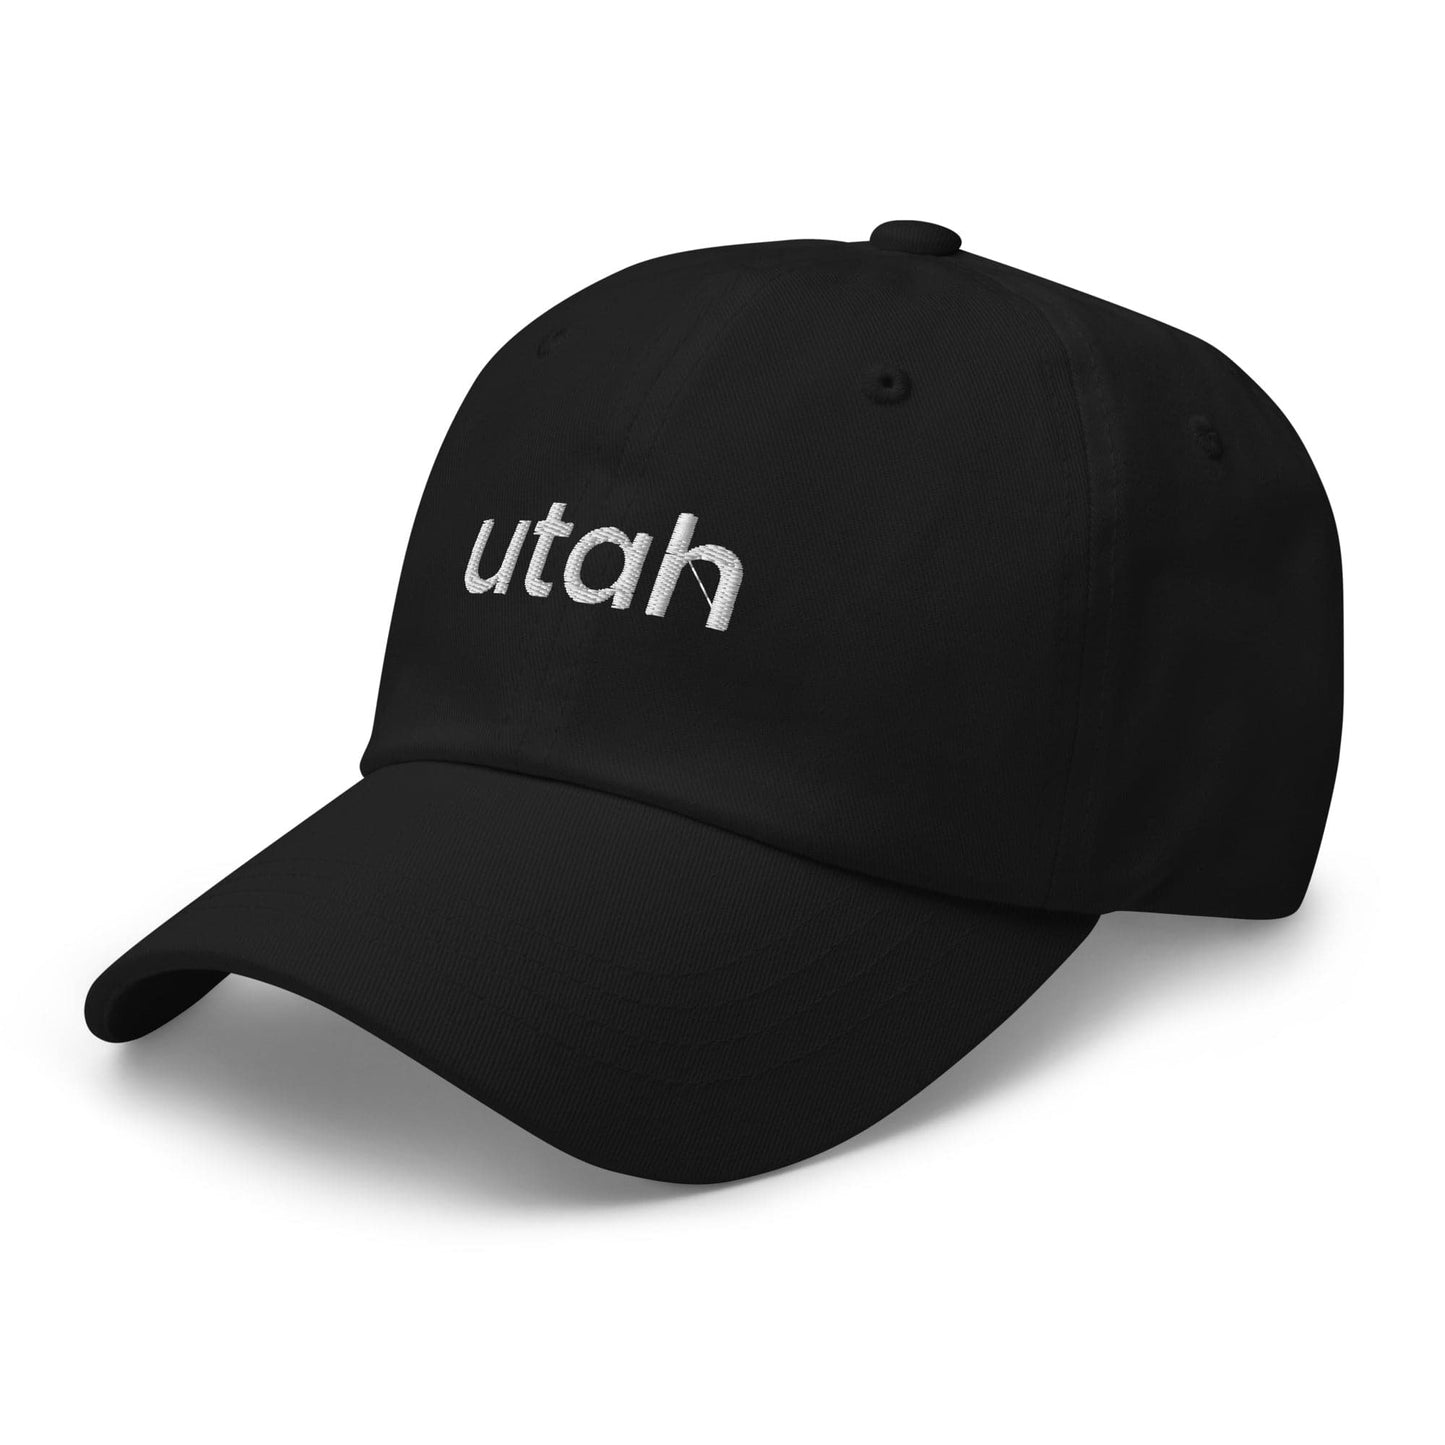 subtleflight Utah Dad hat